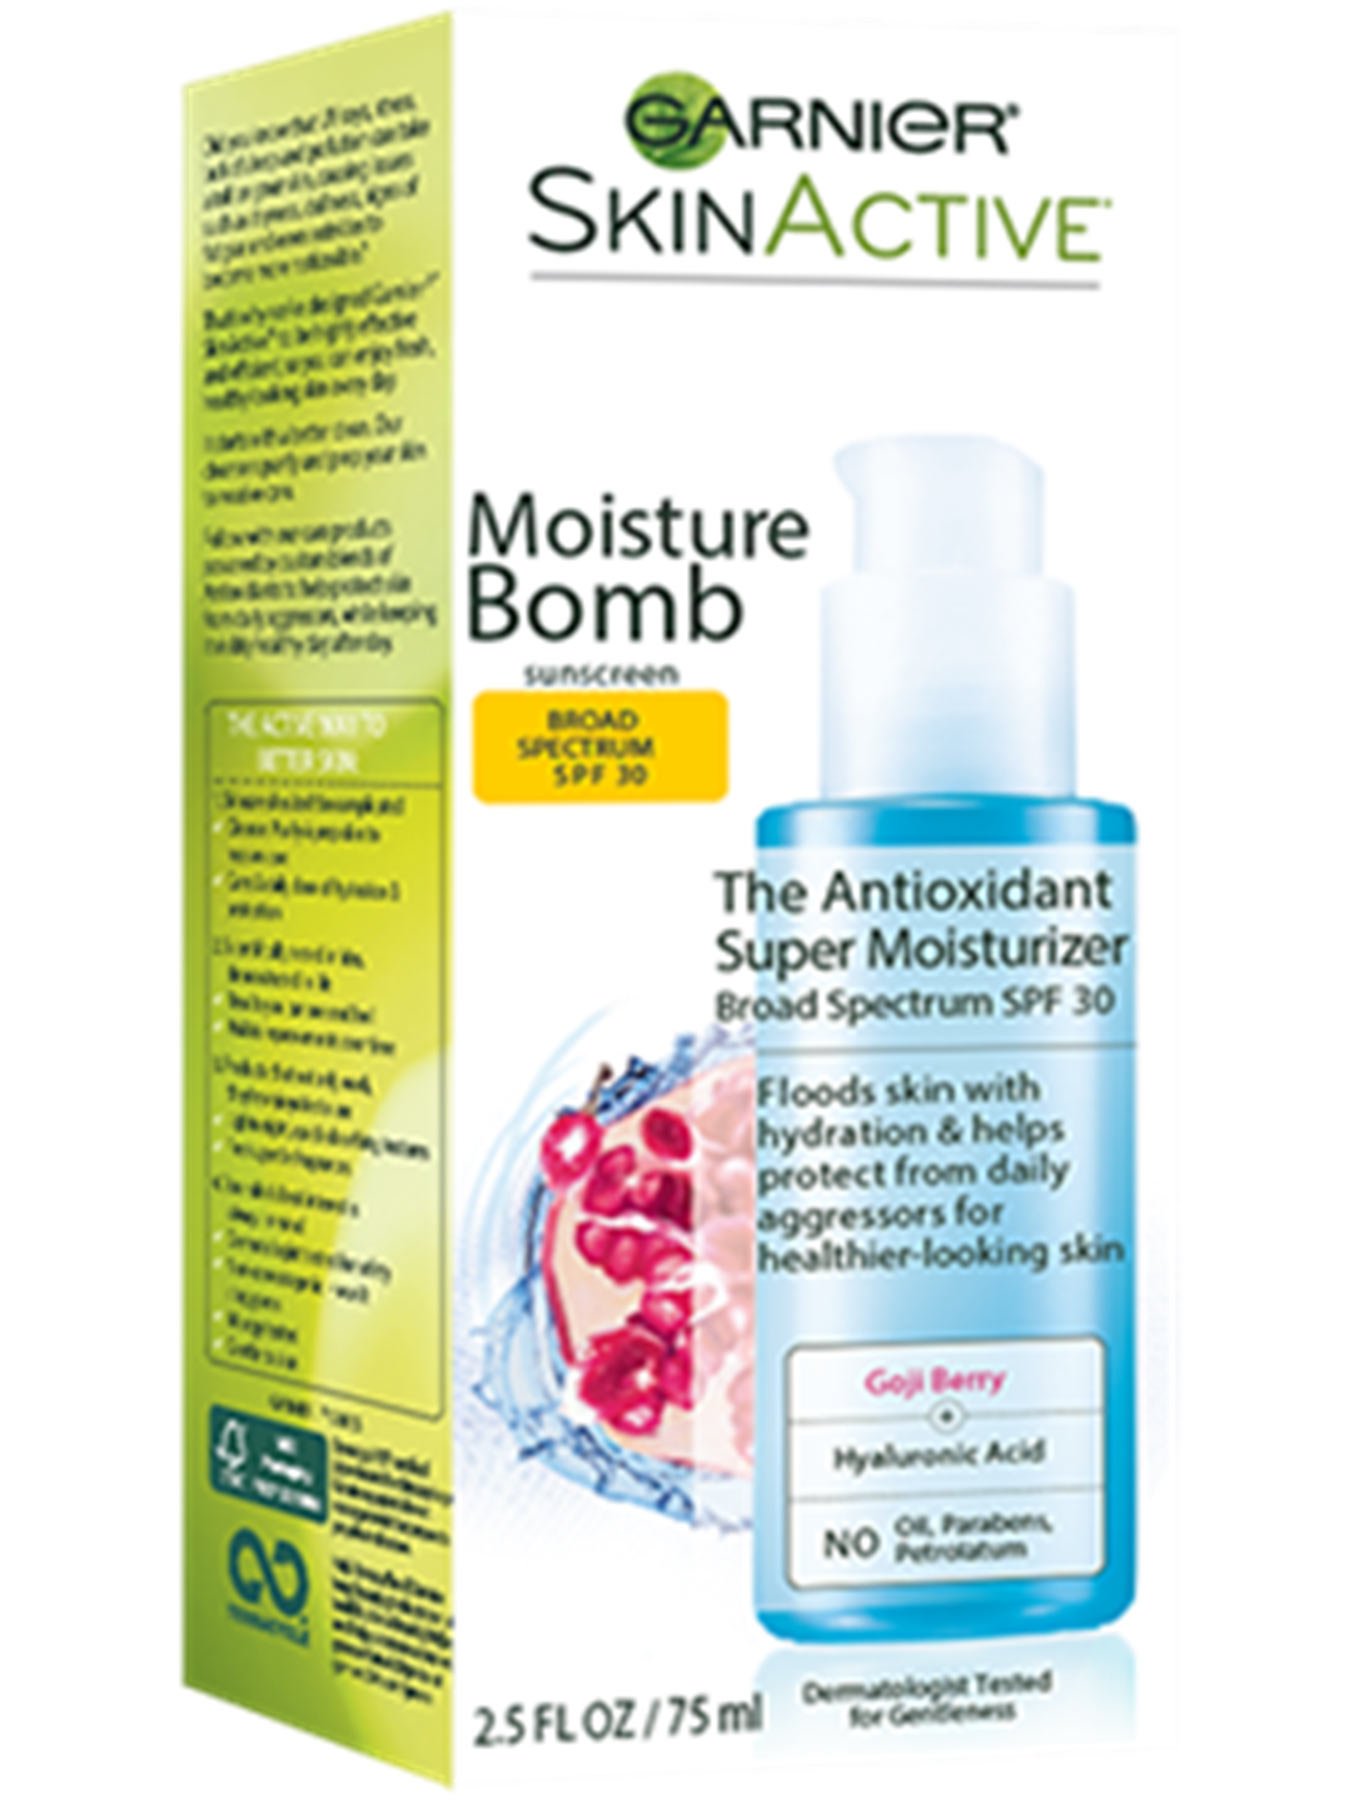 garnier skinactive moisture bomb the antioxidant super moisturizer spf skin care productshot 2